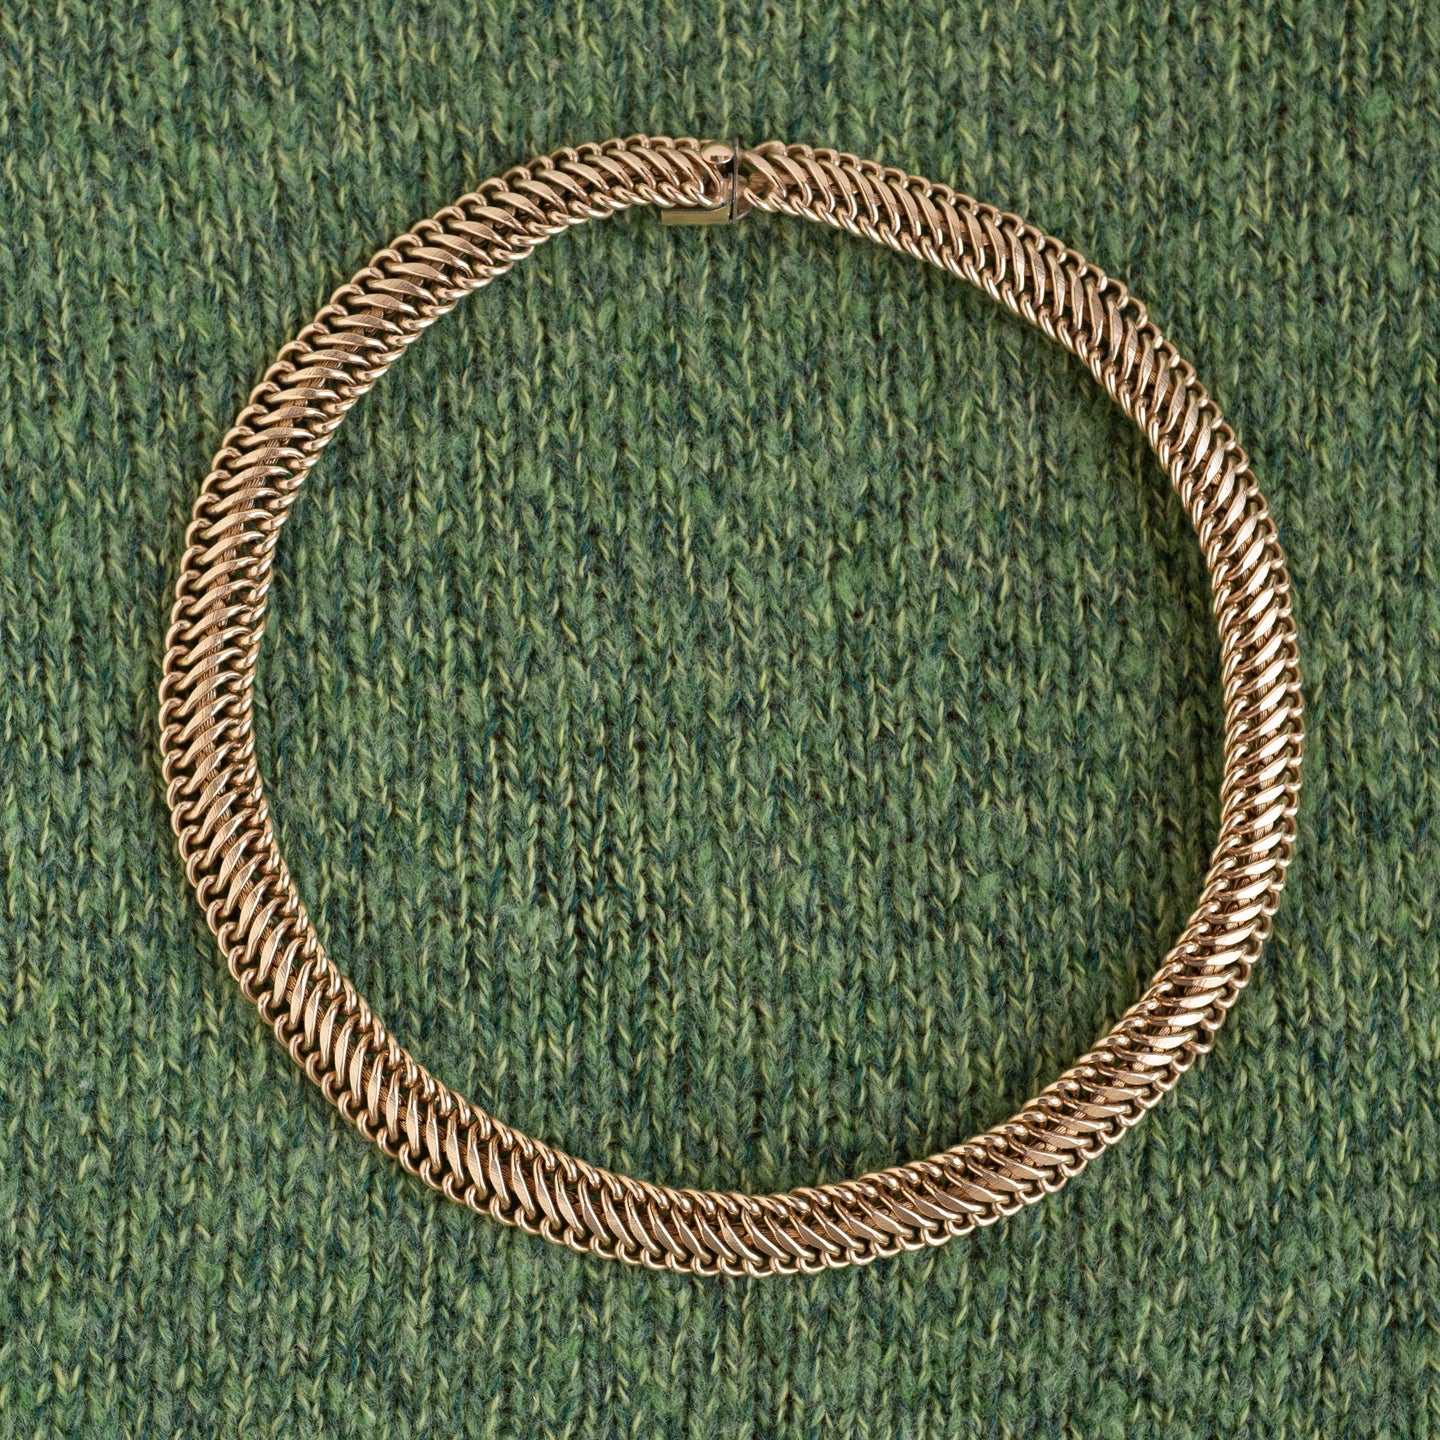 Thick Flat Gold-filled Choker Chain c1950